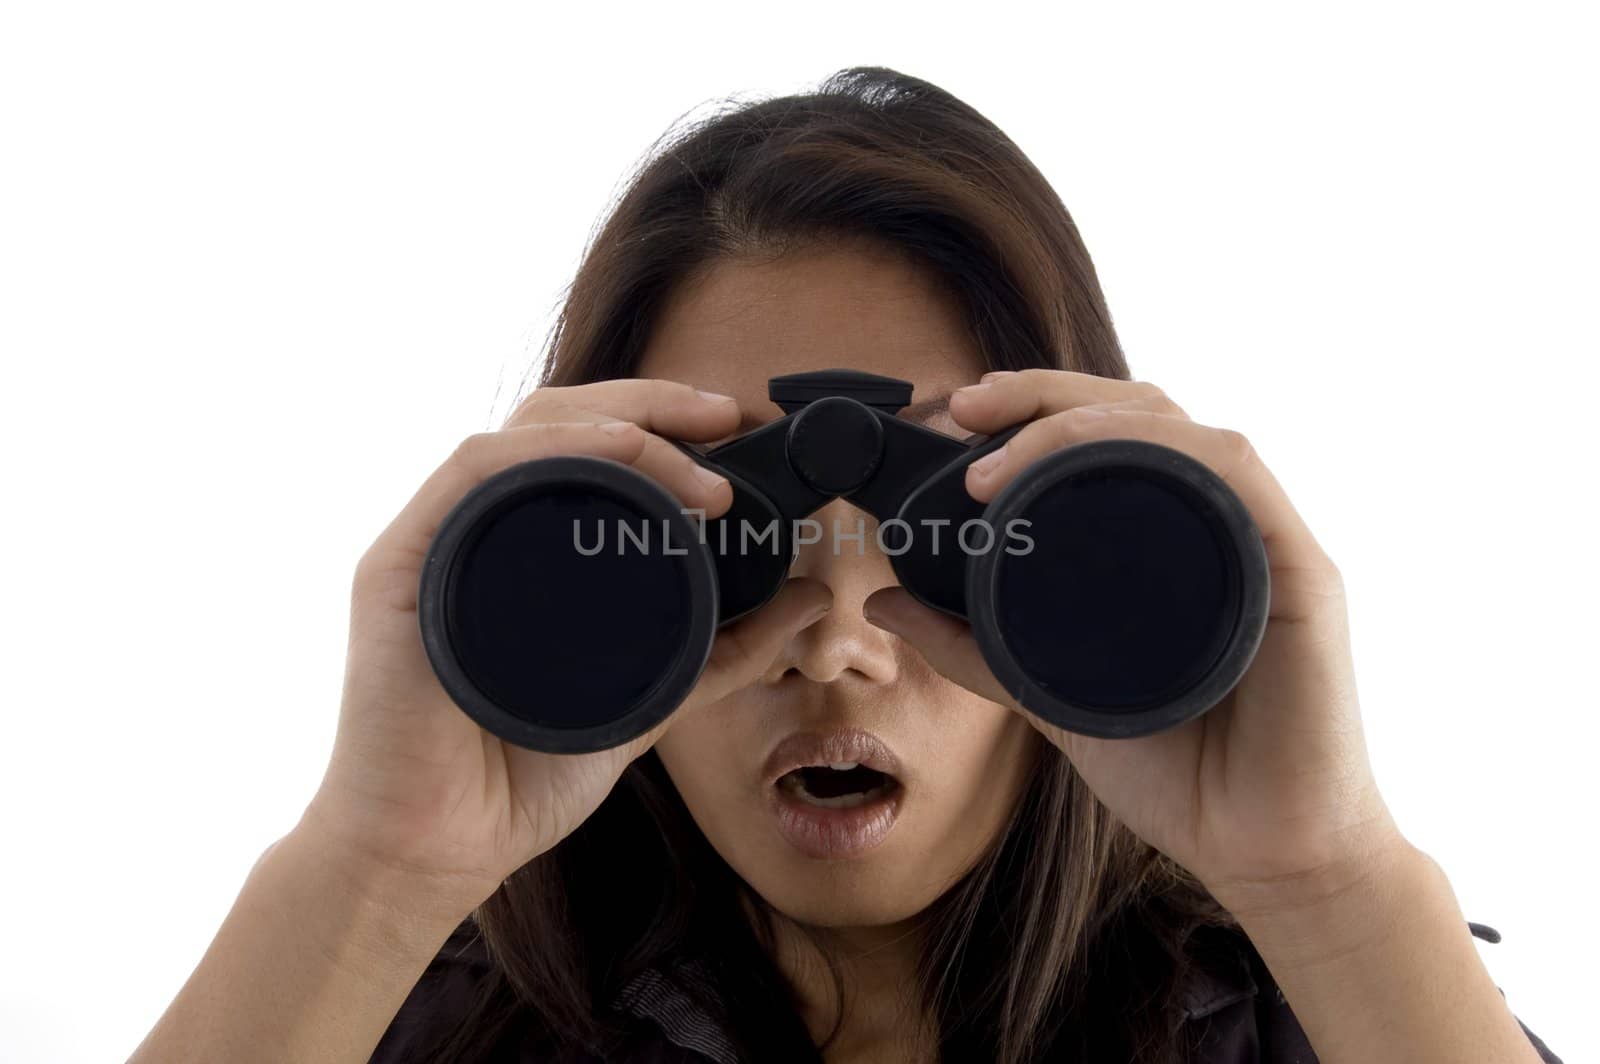 astonished female watching through binocular by imagerymajestic